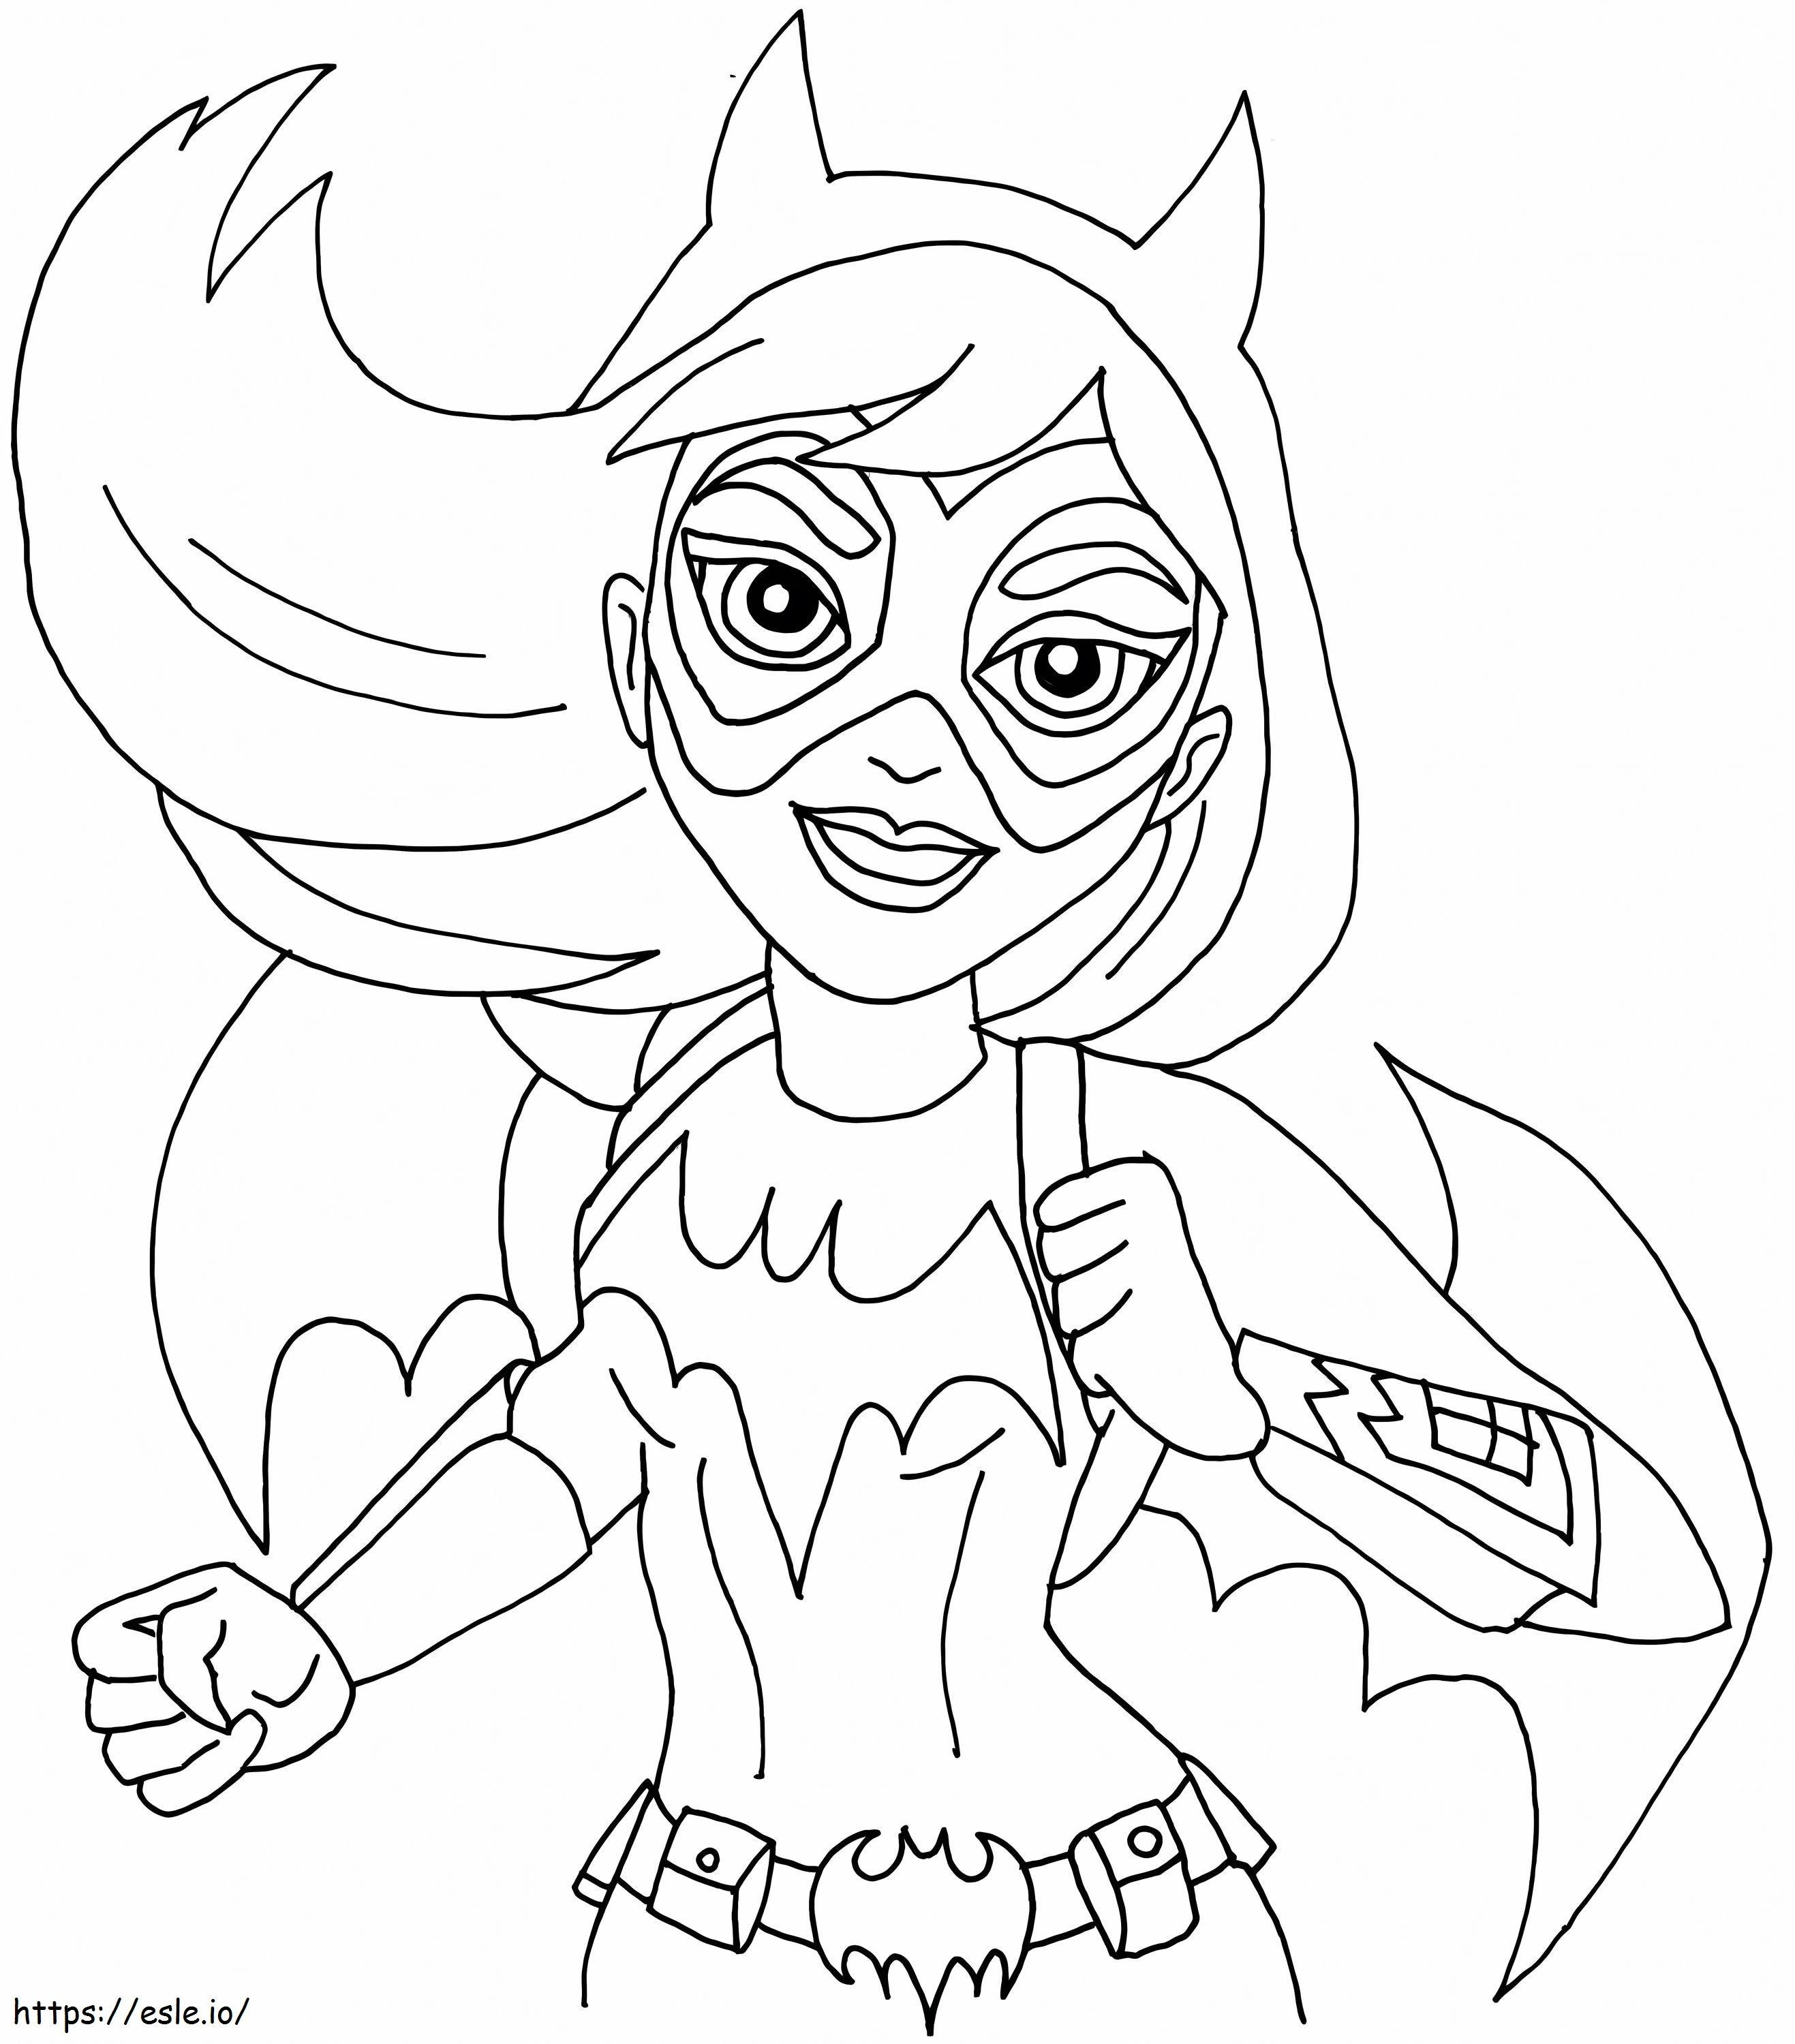 Coloriage Visage de Batgirl à imprimer dessin